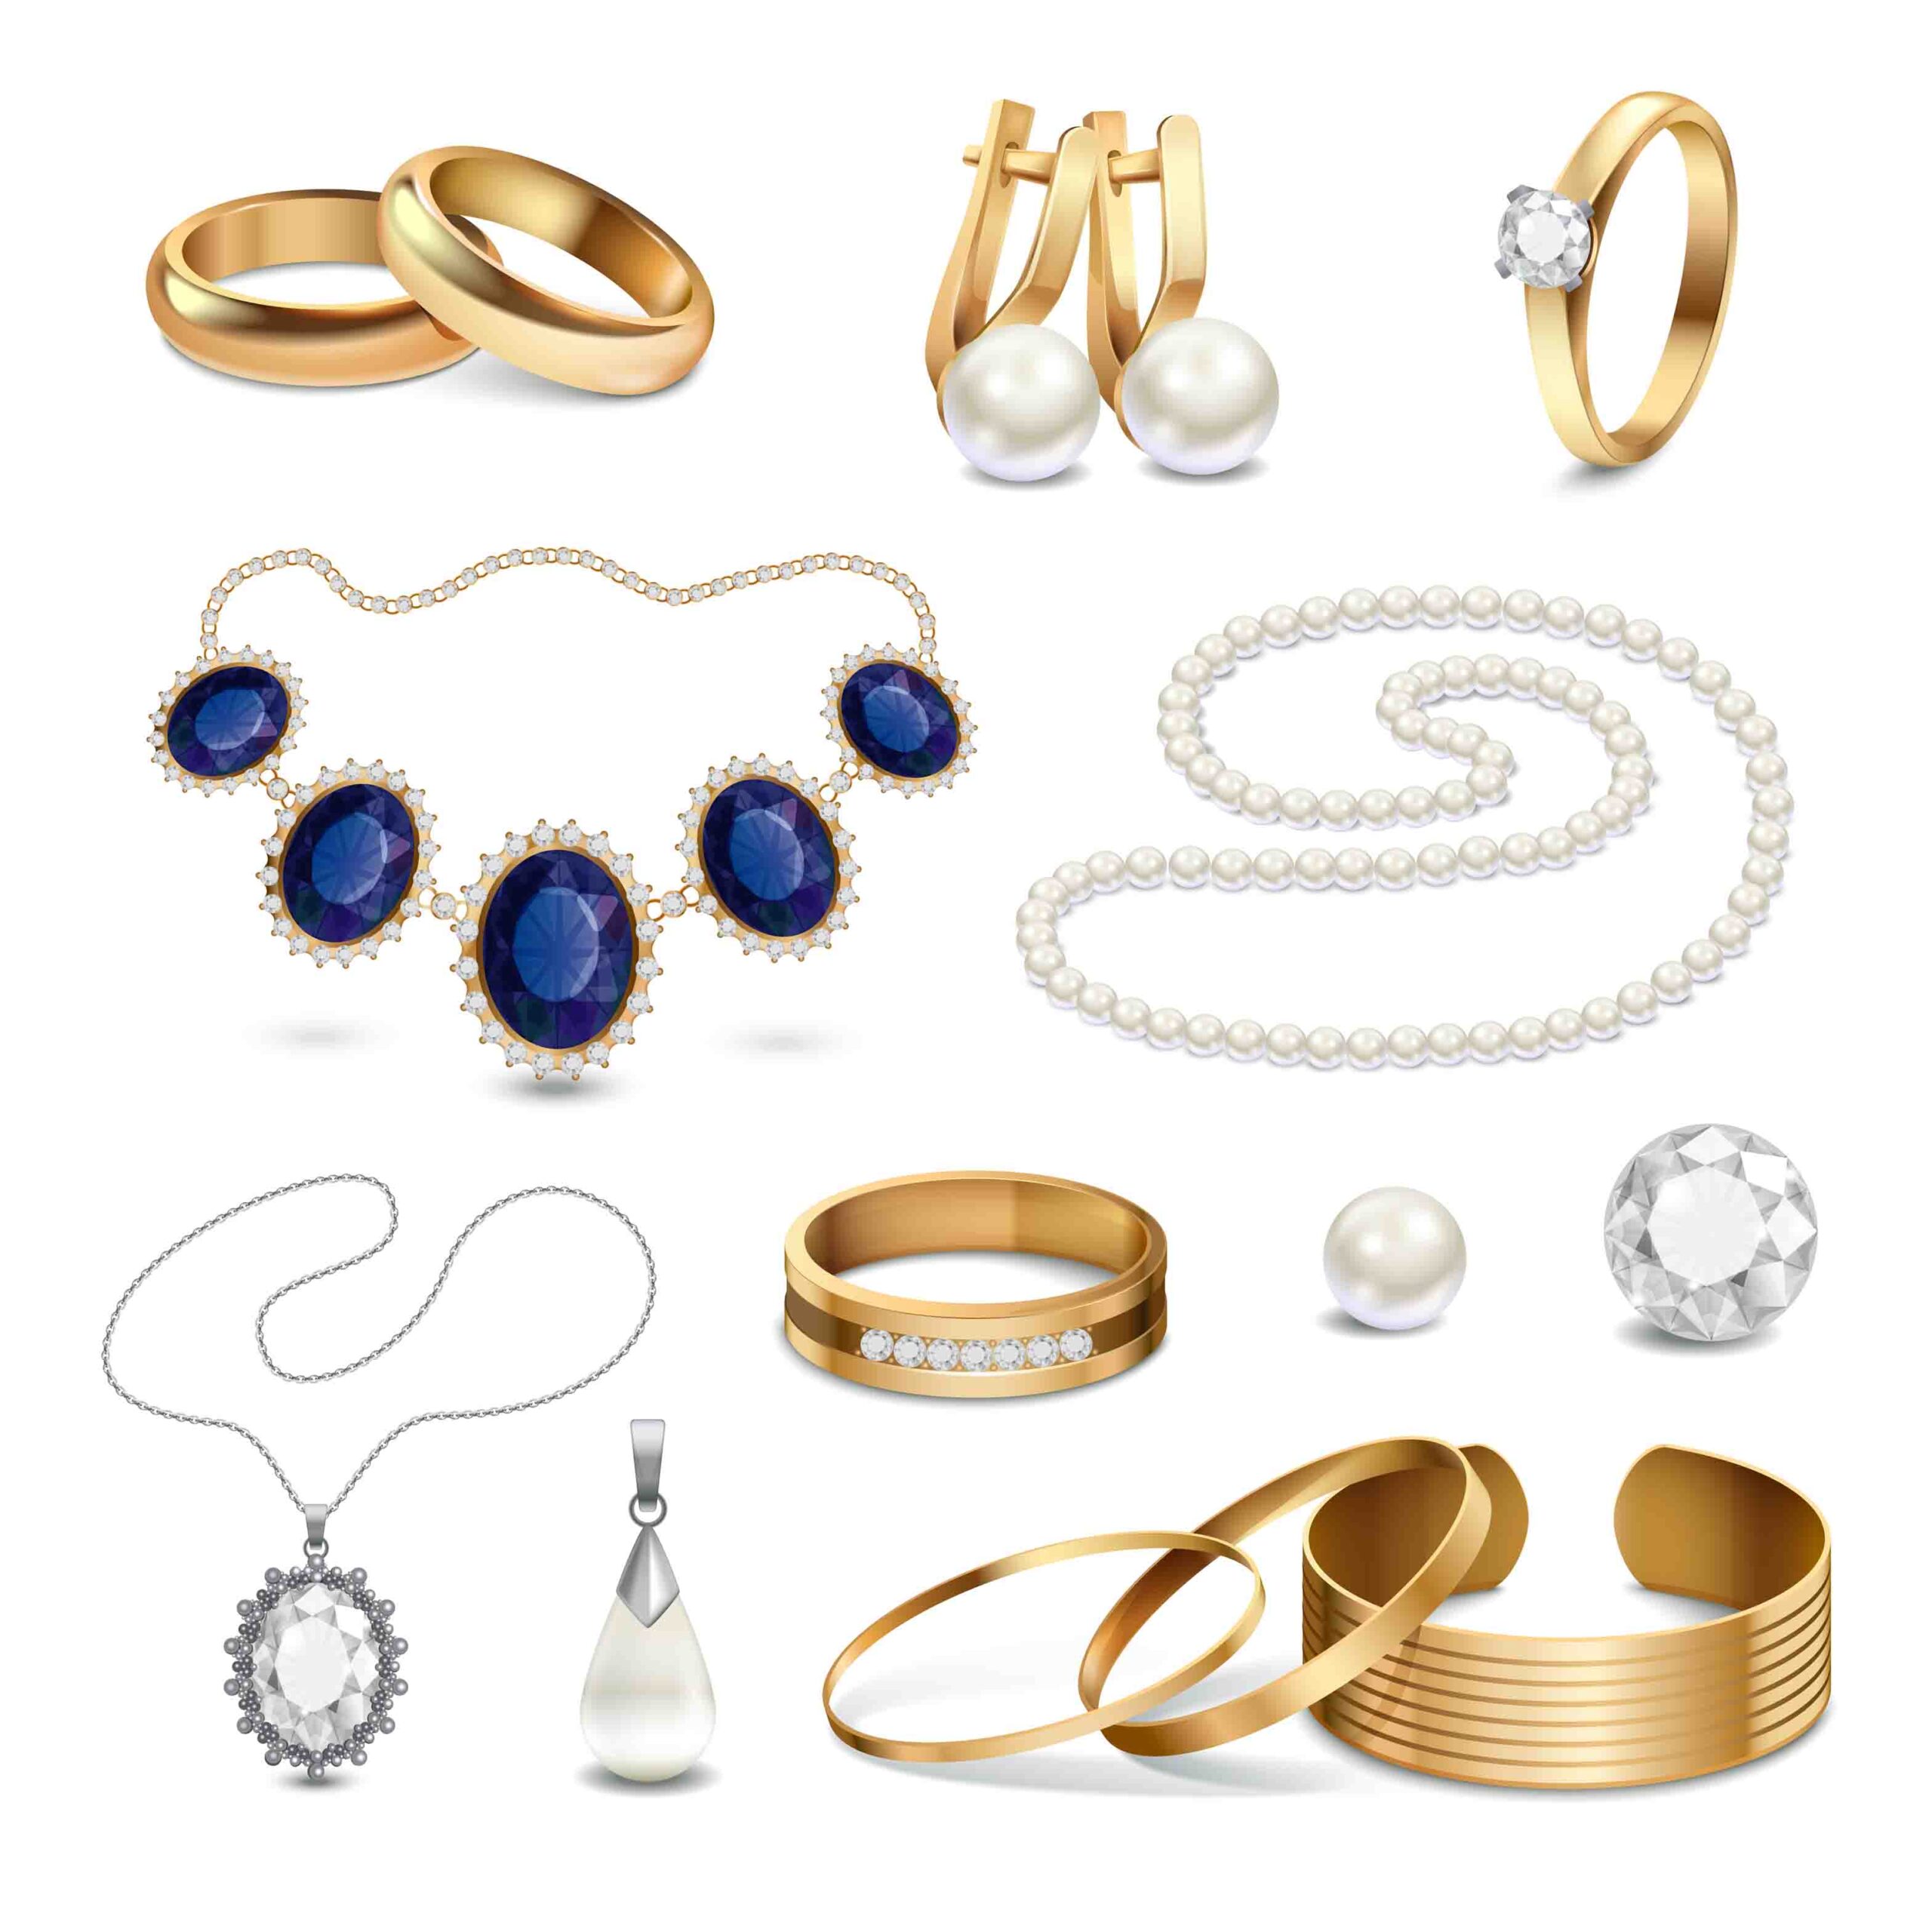 Online jewellery designing courses